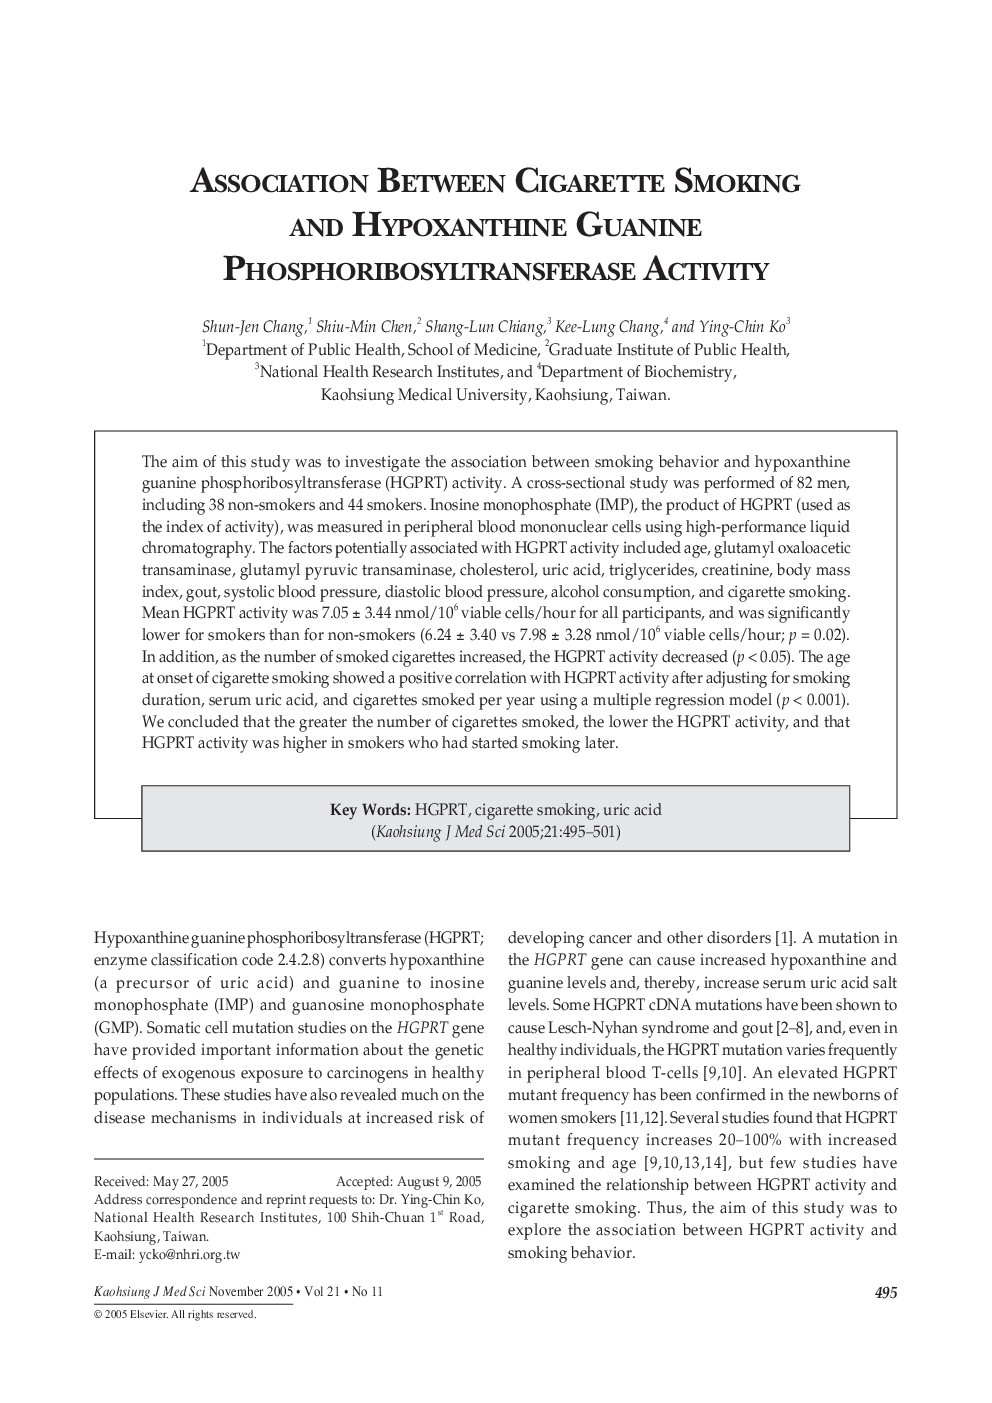 Association between Cigarette Smoking and Hypoxanthine Guanine Phosphoribosyltransferase Activity